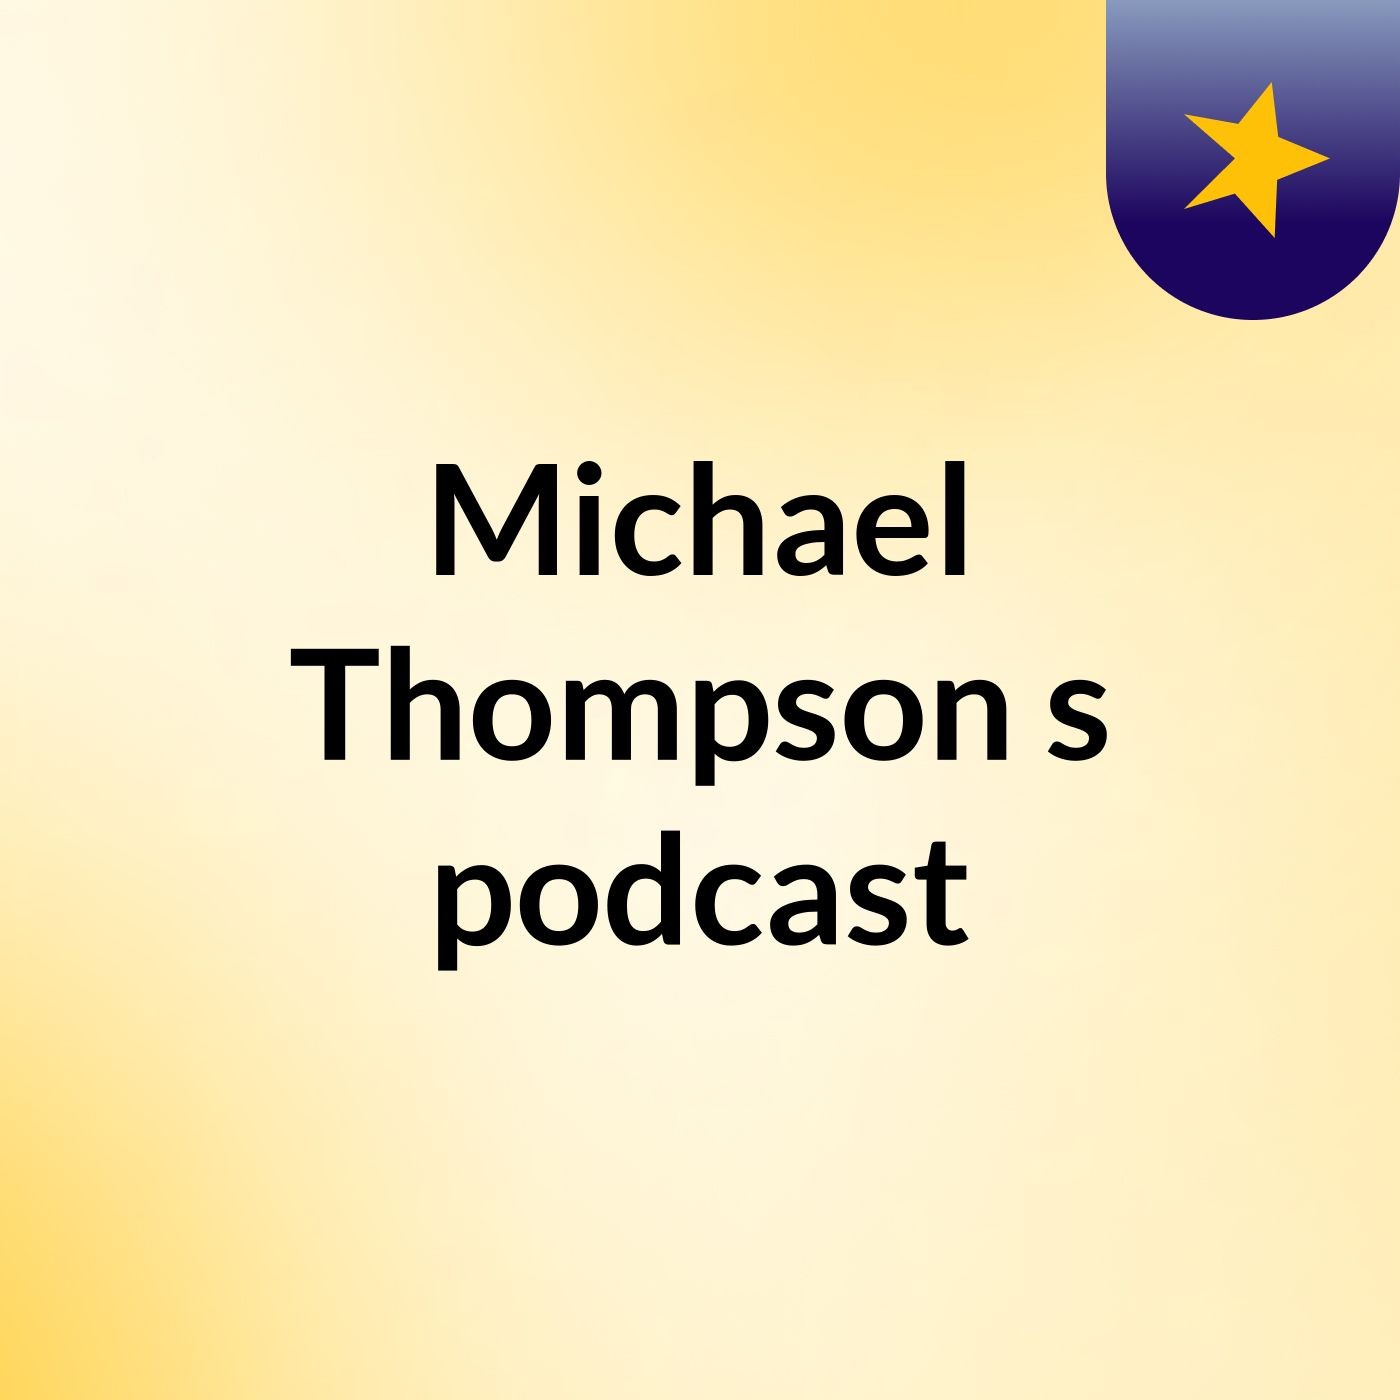 Michael Thompson's podcast